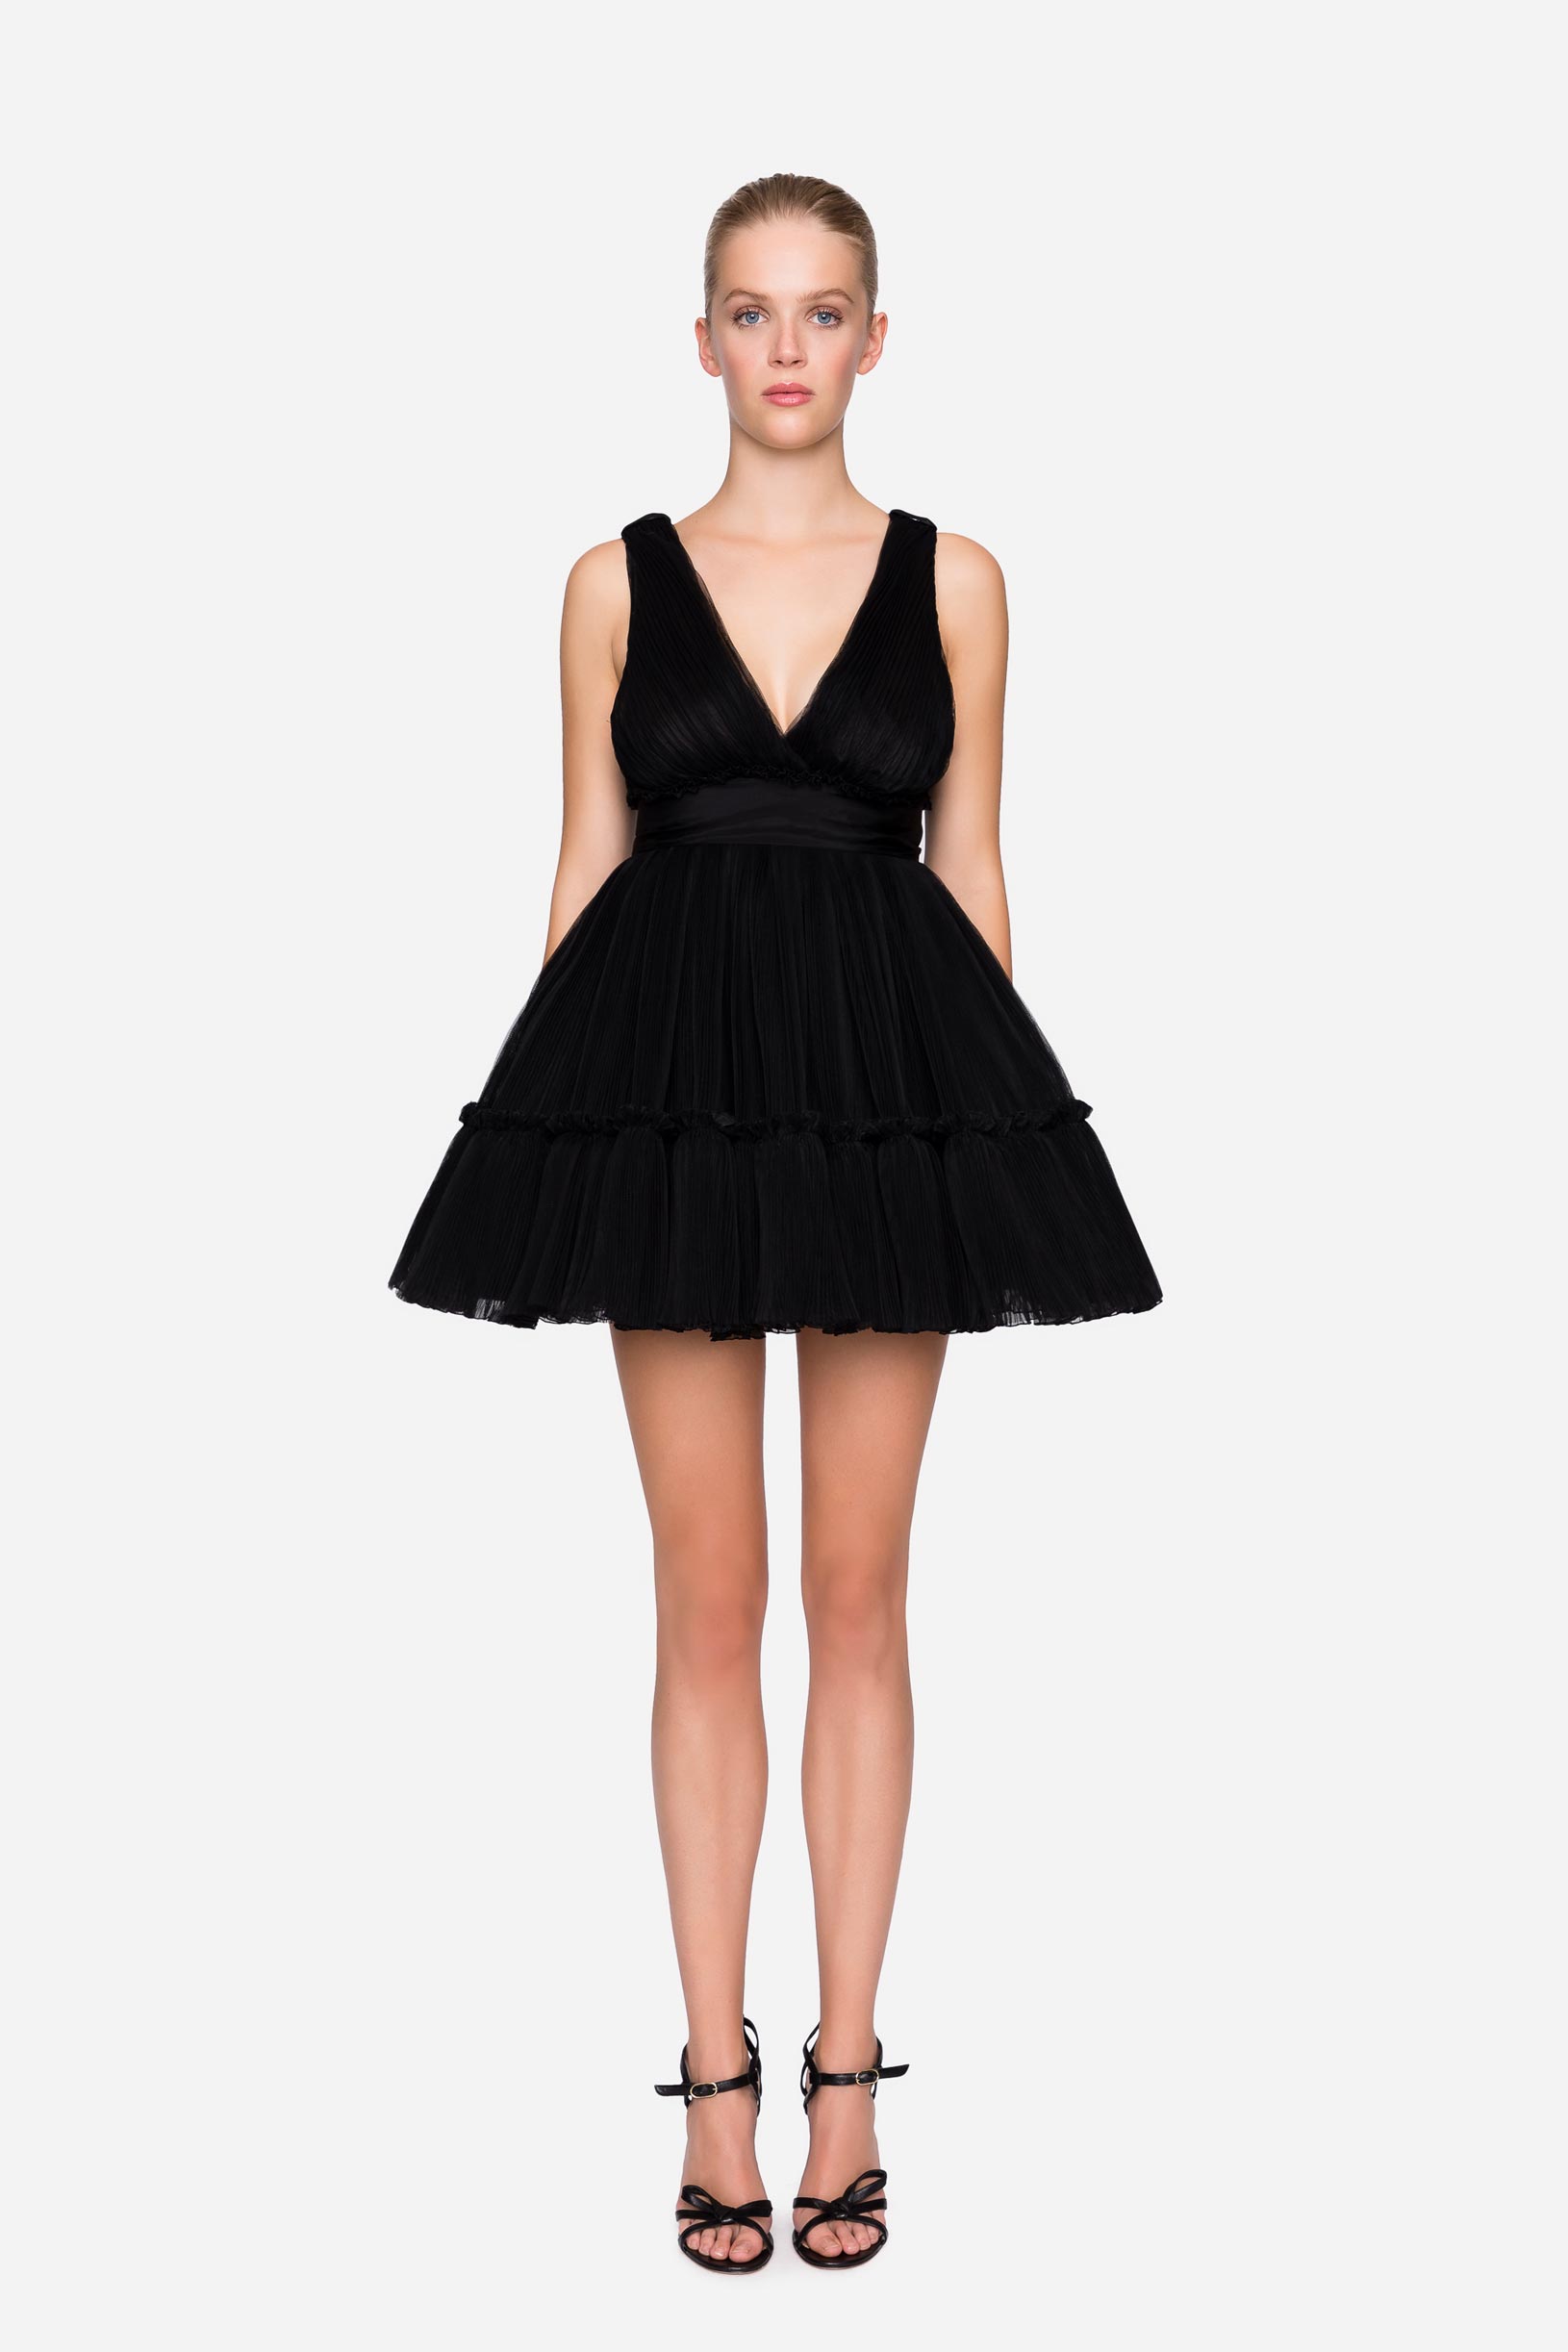 Tianna Dress - Black – Sorelleuk